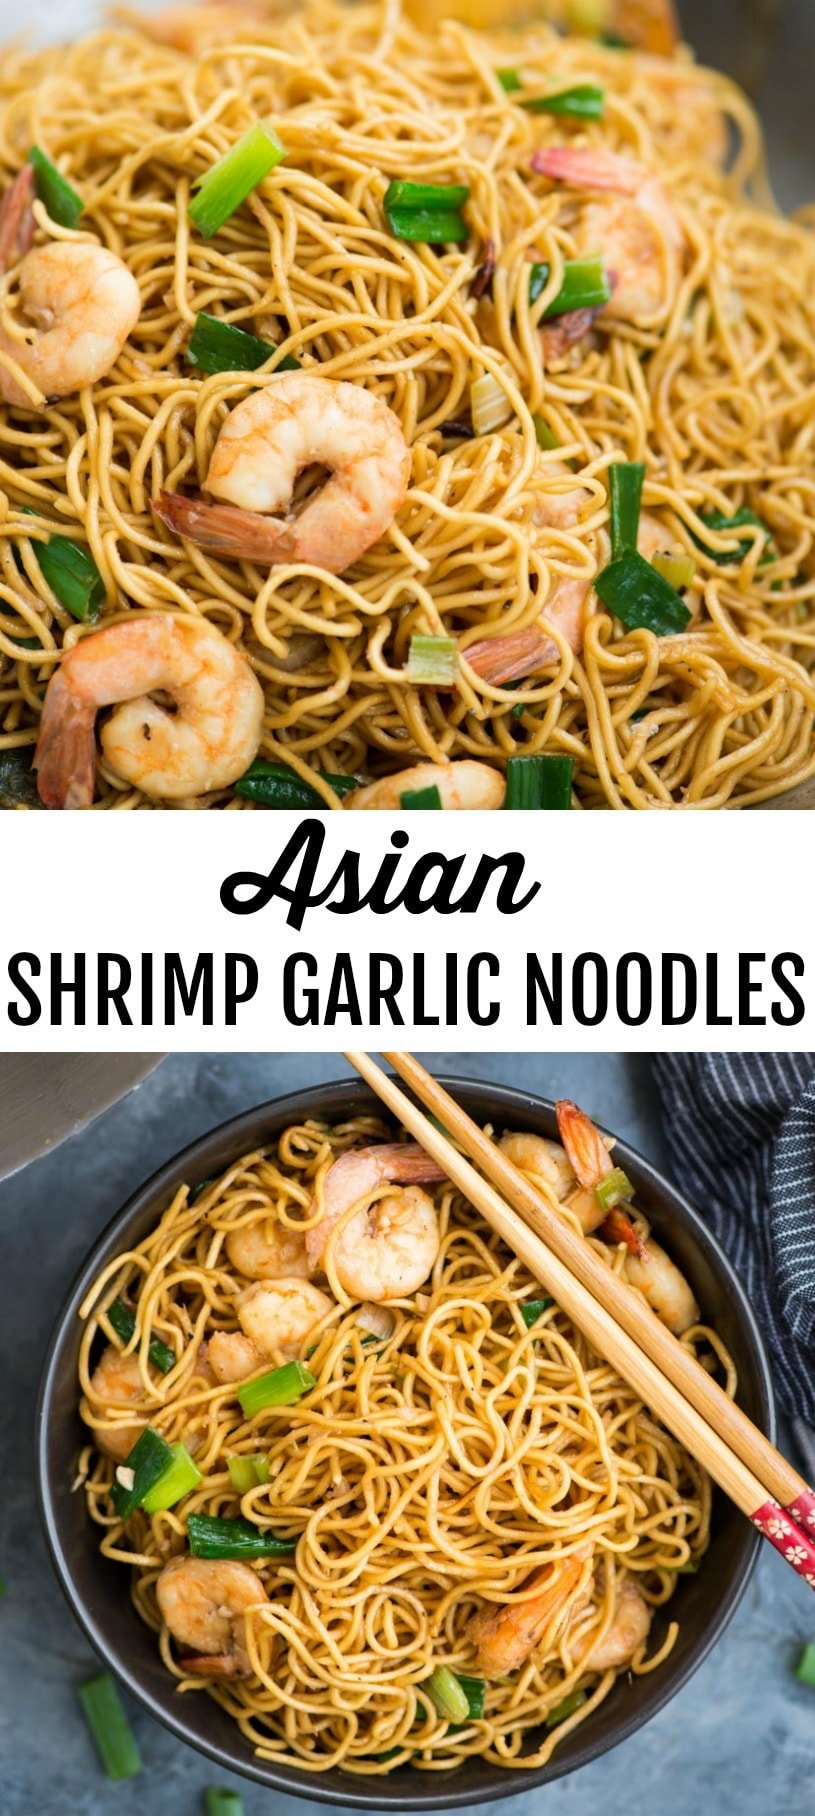 Asian Shrimp Garlic Noodles | The flavours of kitchen